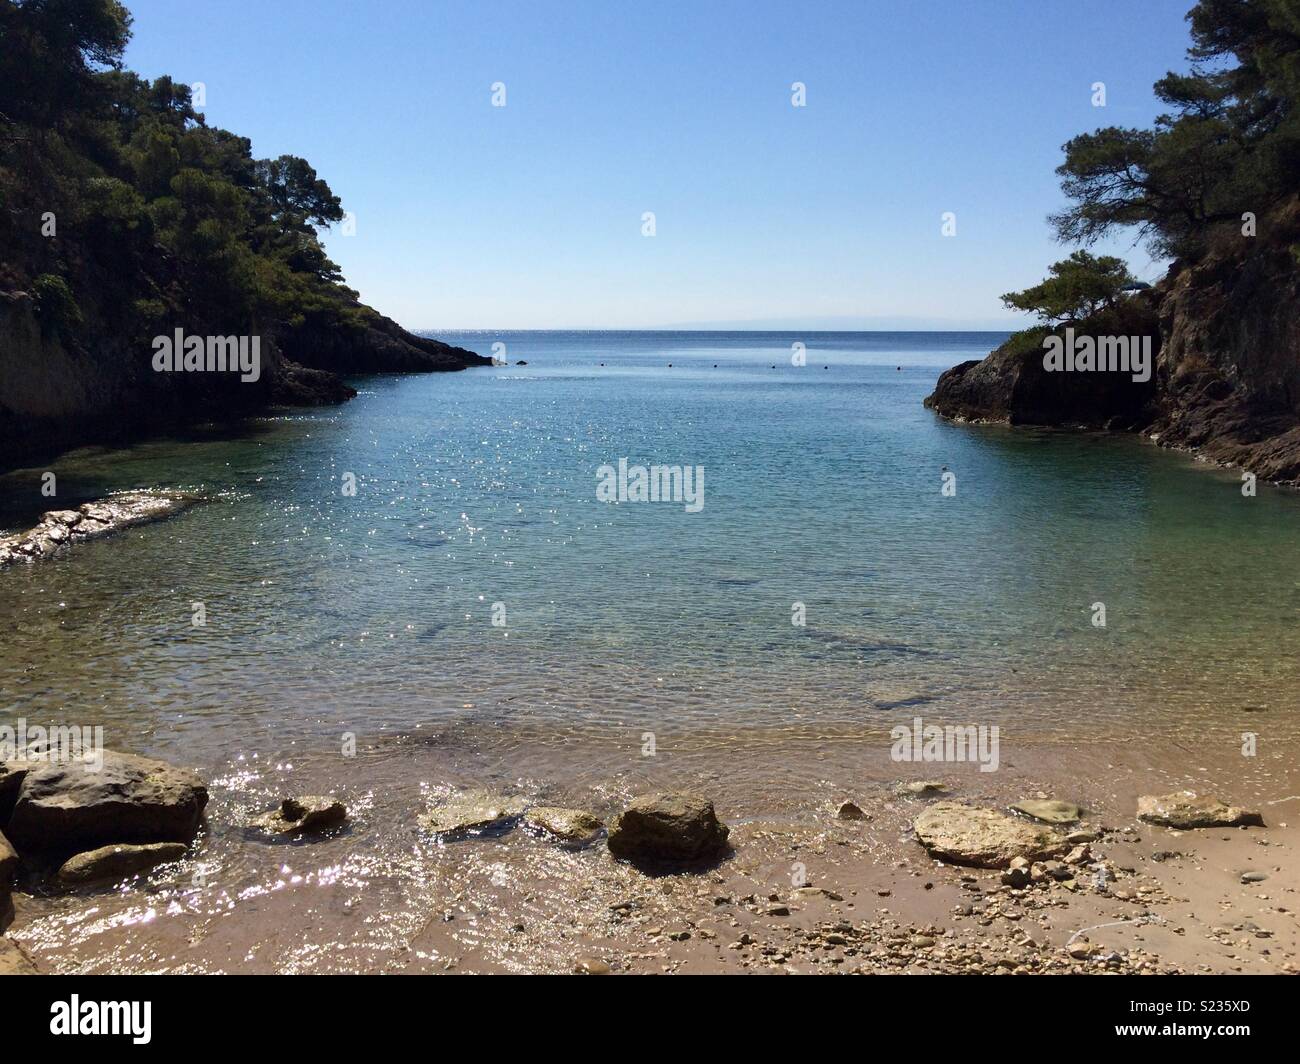 Cala Matano, San Domino, Isole Tremiti, Italia Foto stock - Alamy